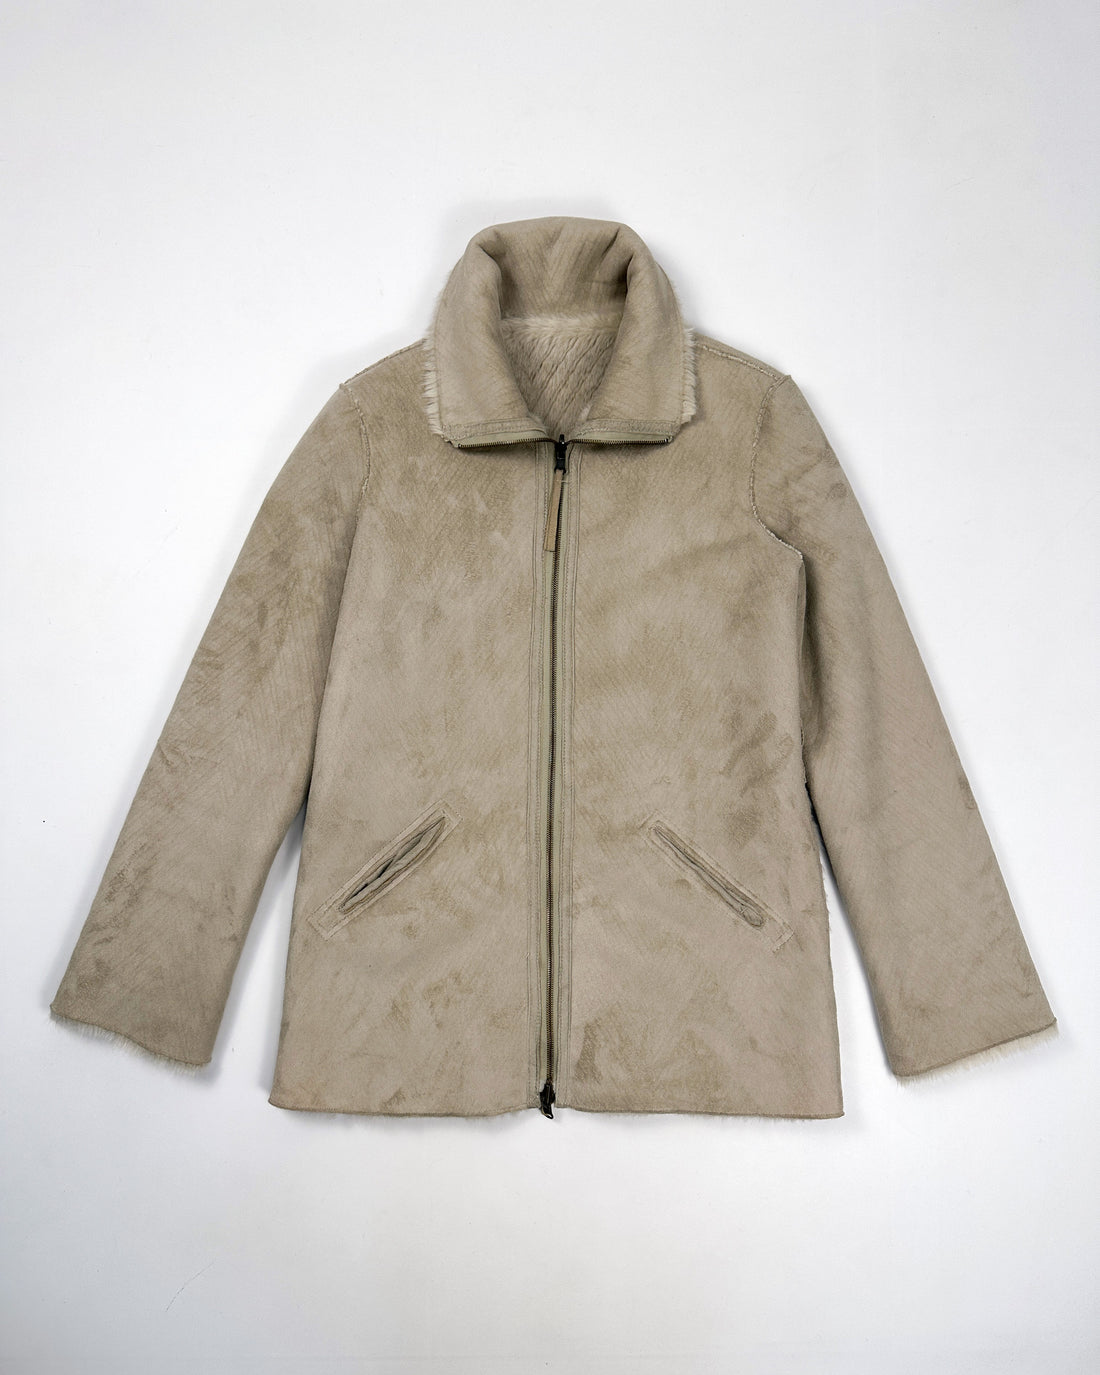 Armani Reversible Beige Fur Jacket 2000's